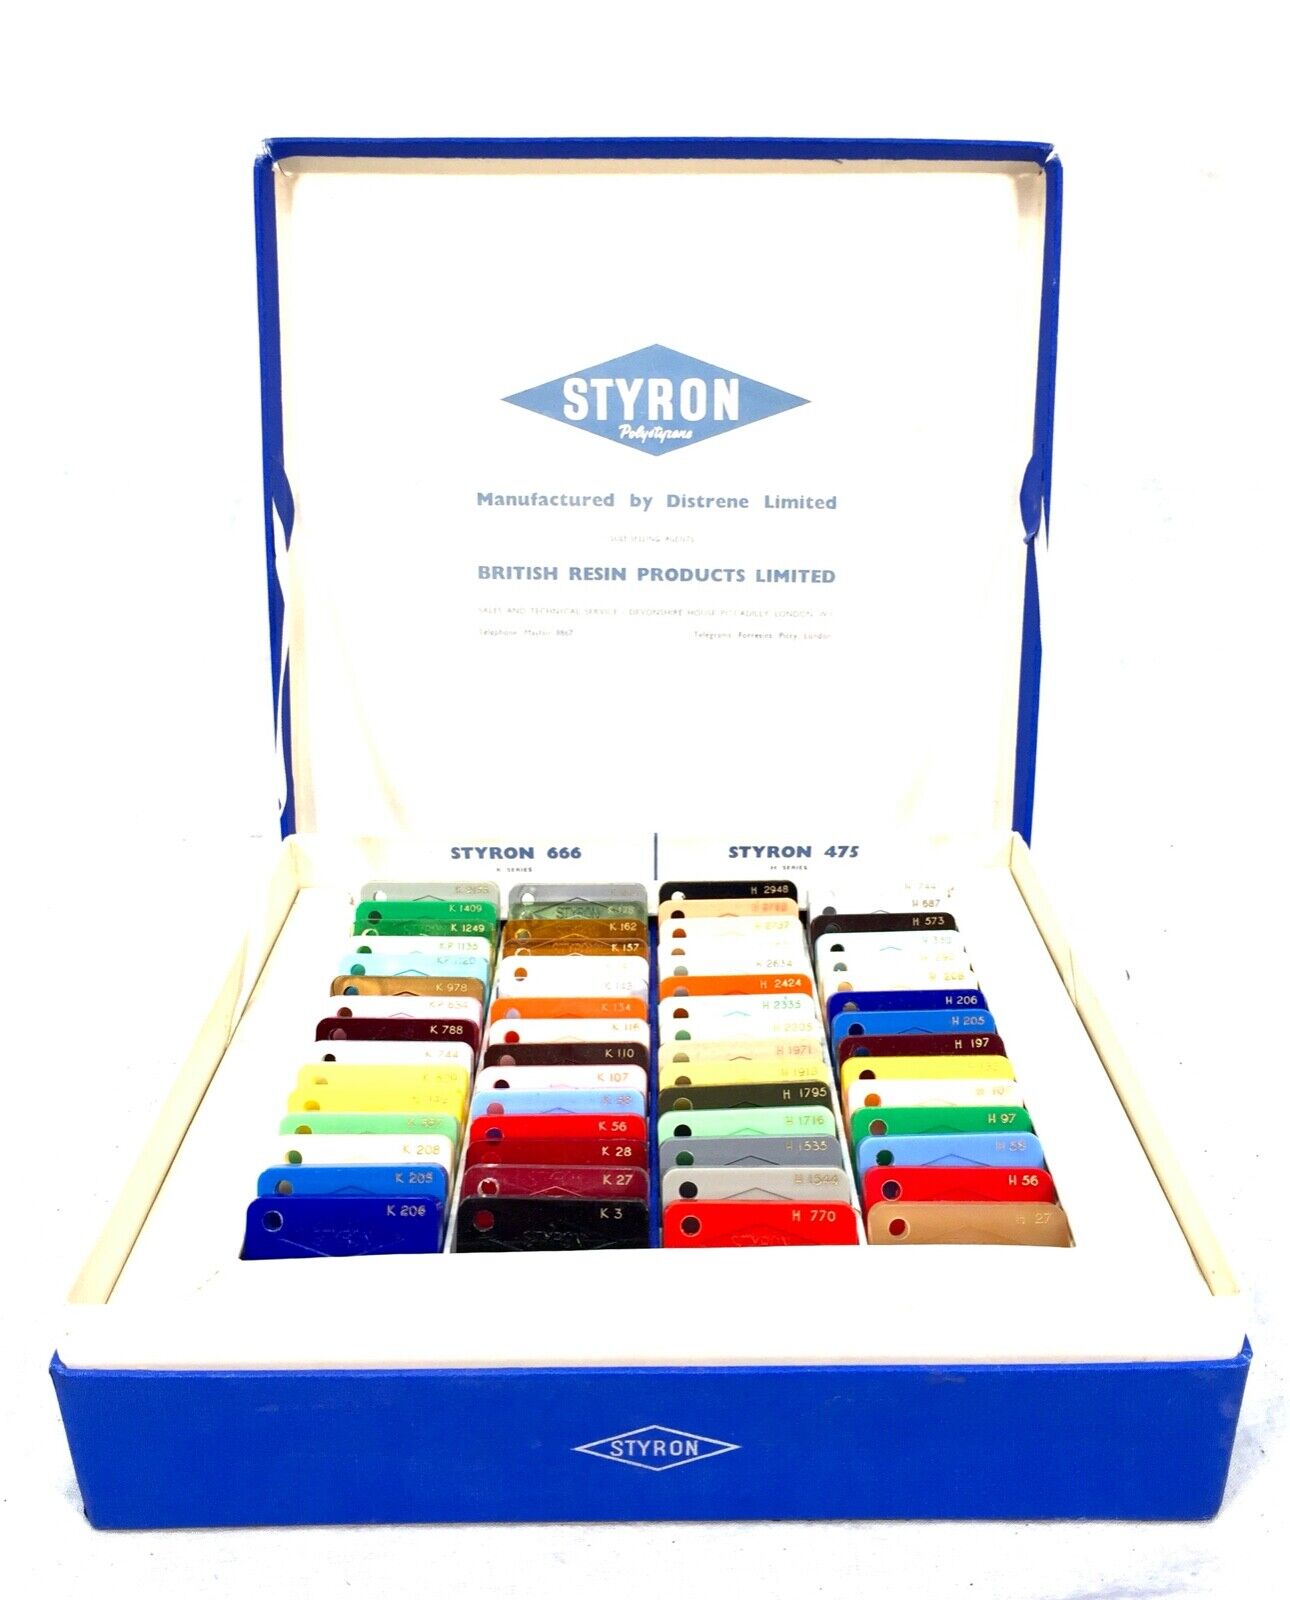 Styron Polystyrene Resin Products Sample Box / Shop Display